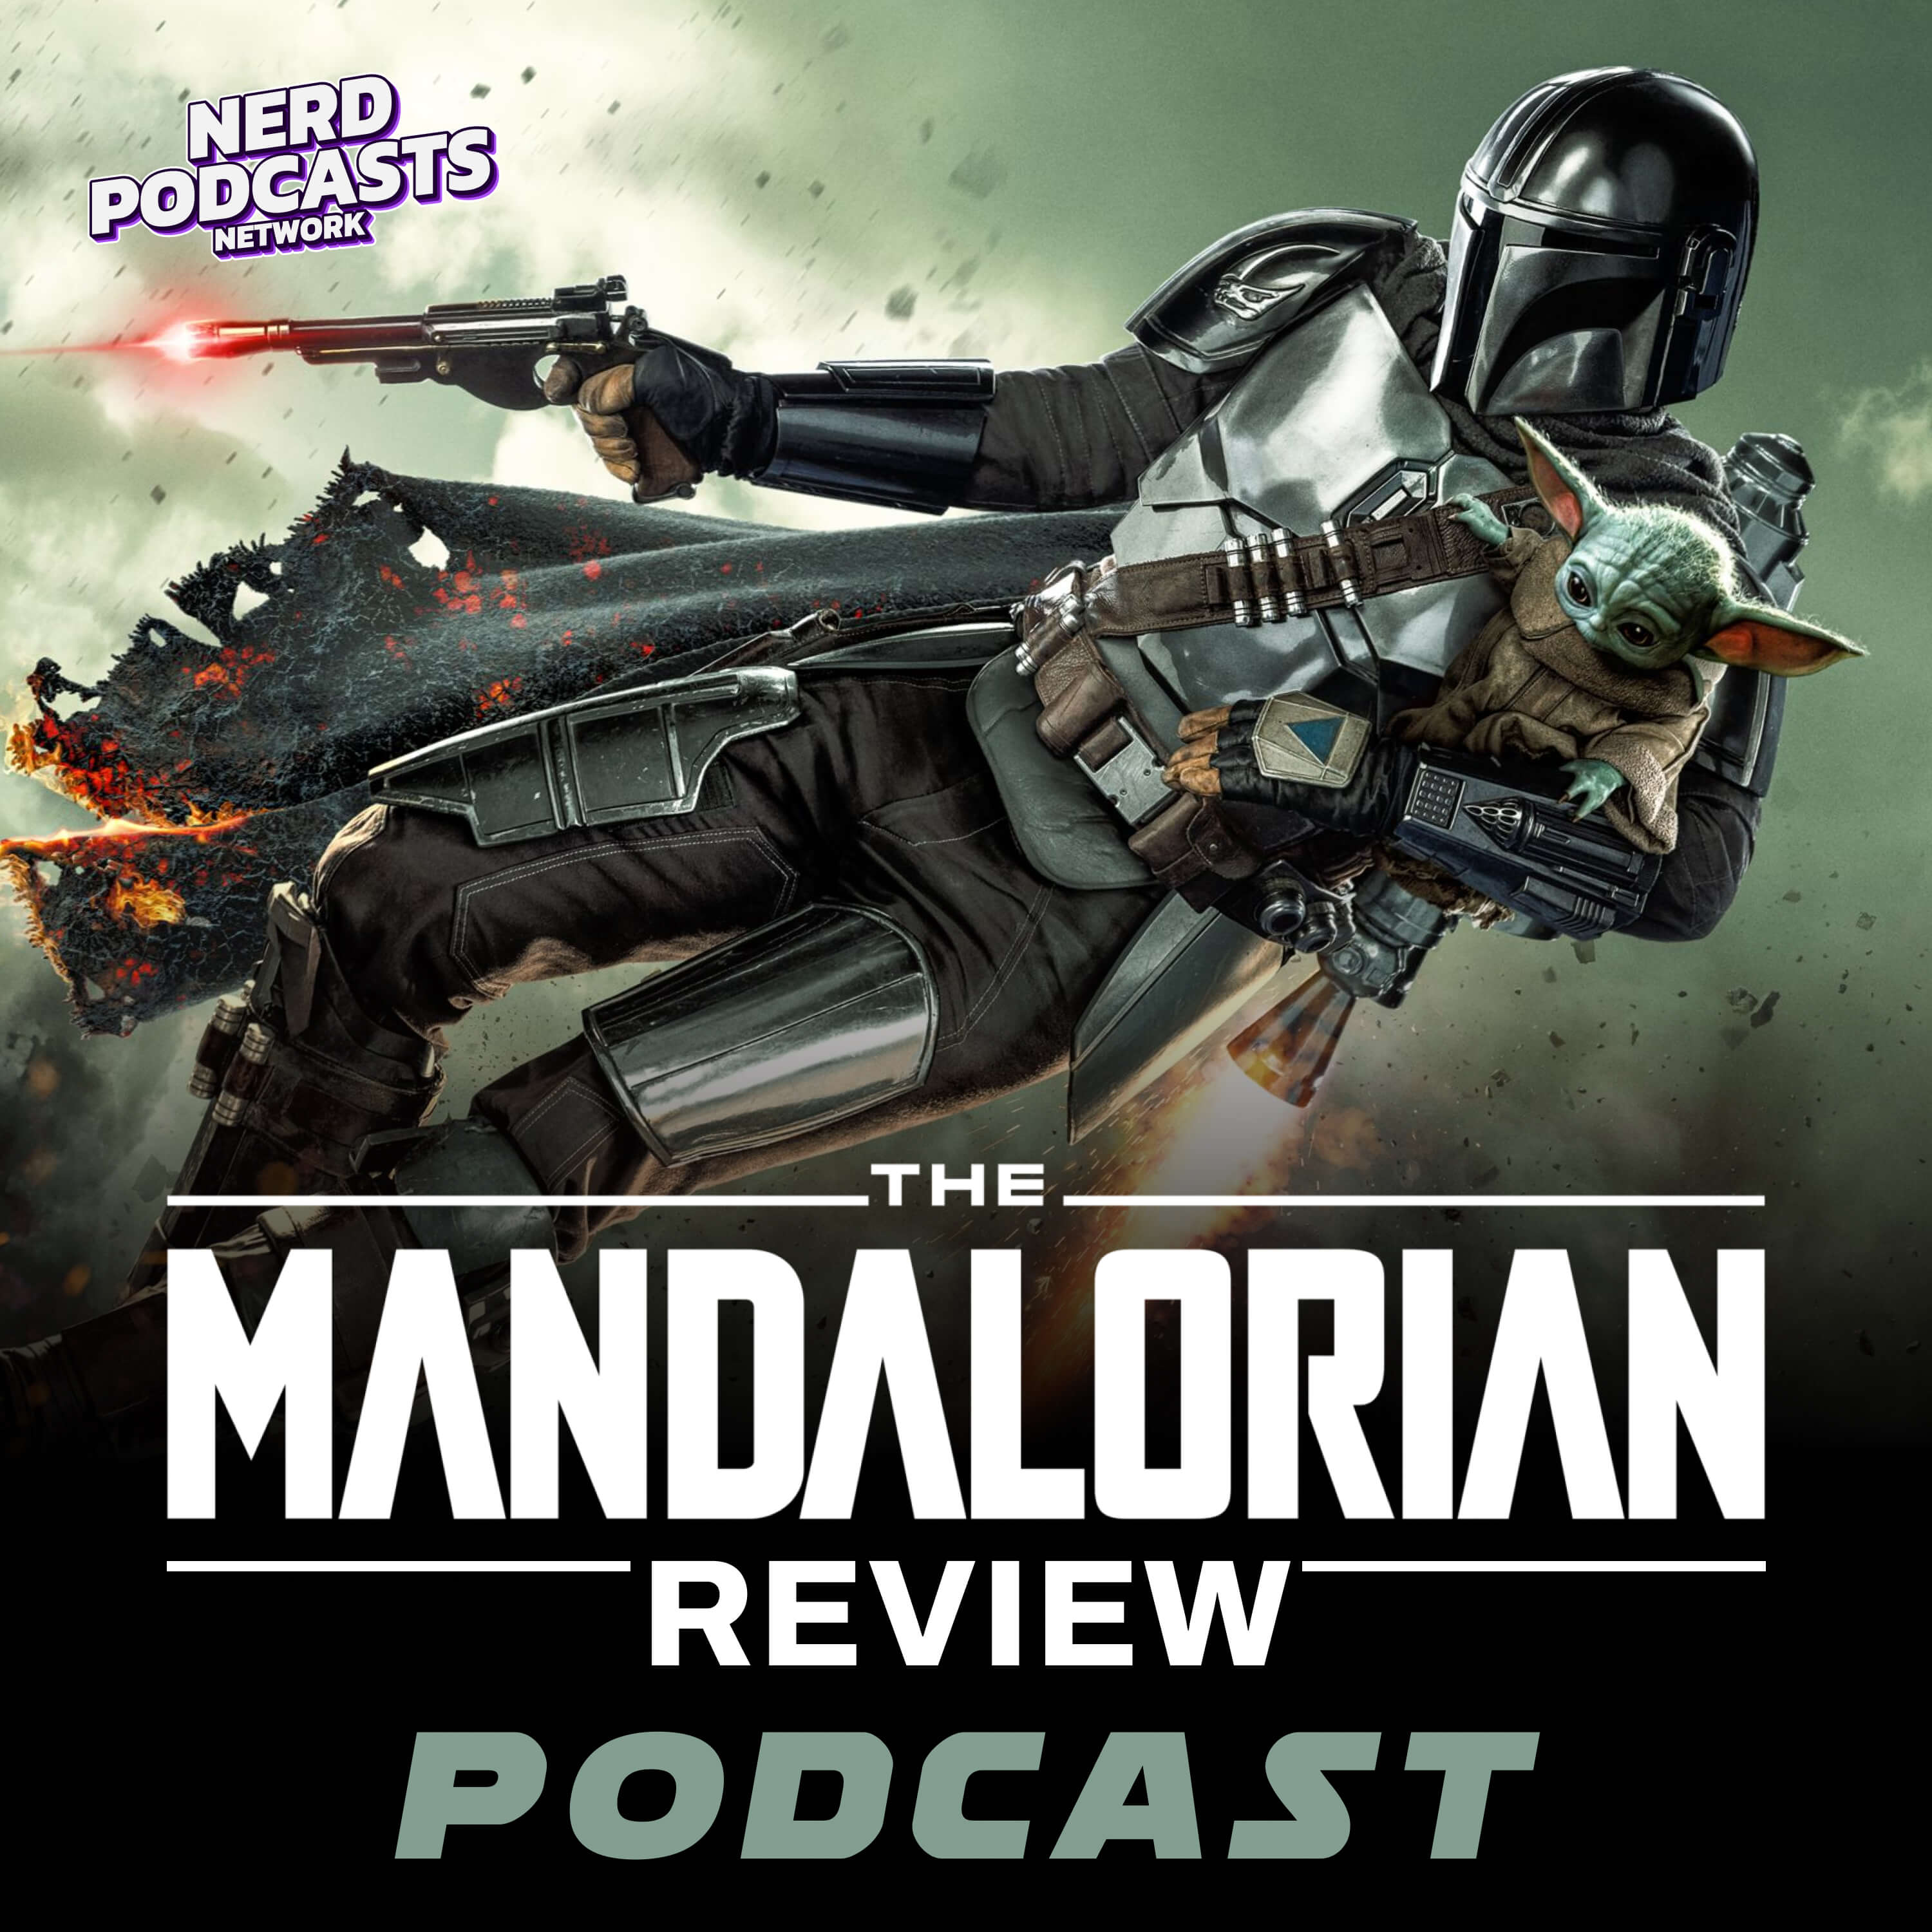 Artwork for podcast The Mandalorian Review Podcast